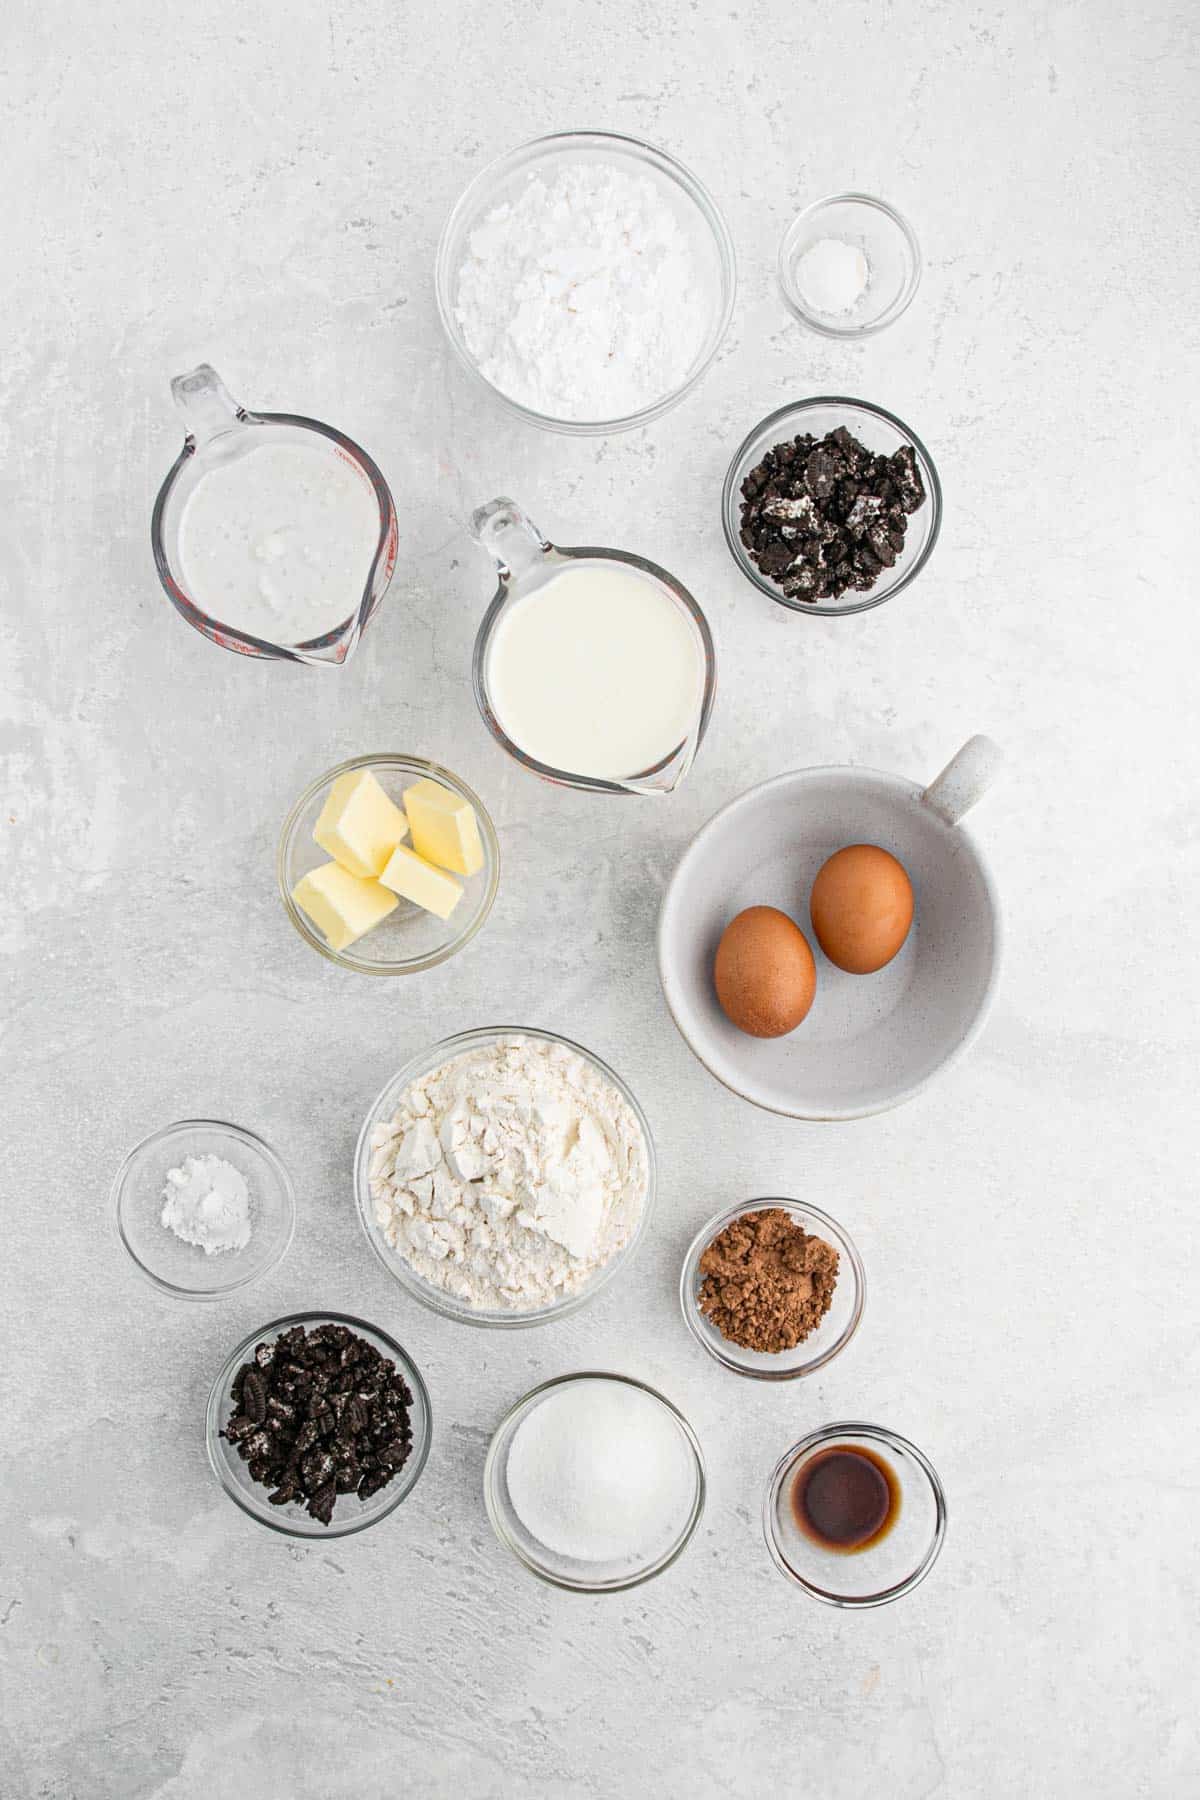 Ingredients to make oreo pancakes on the table.